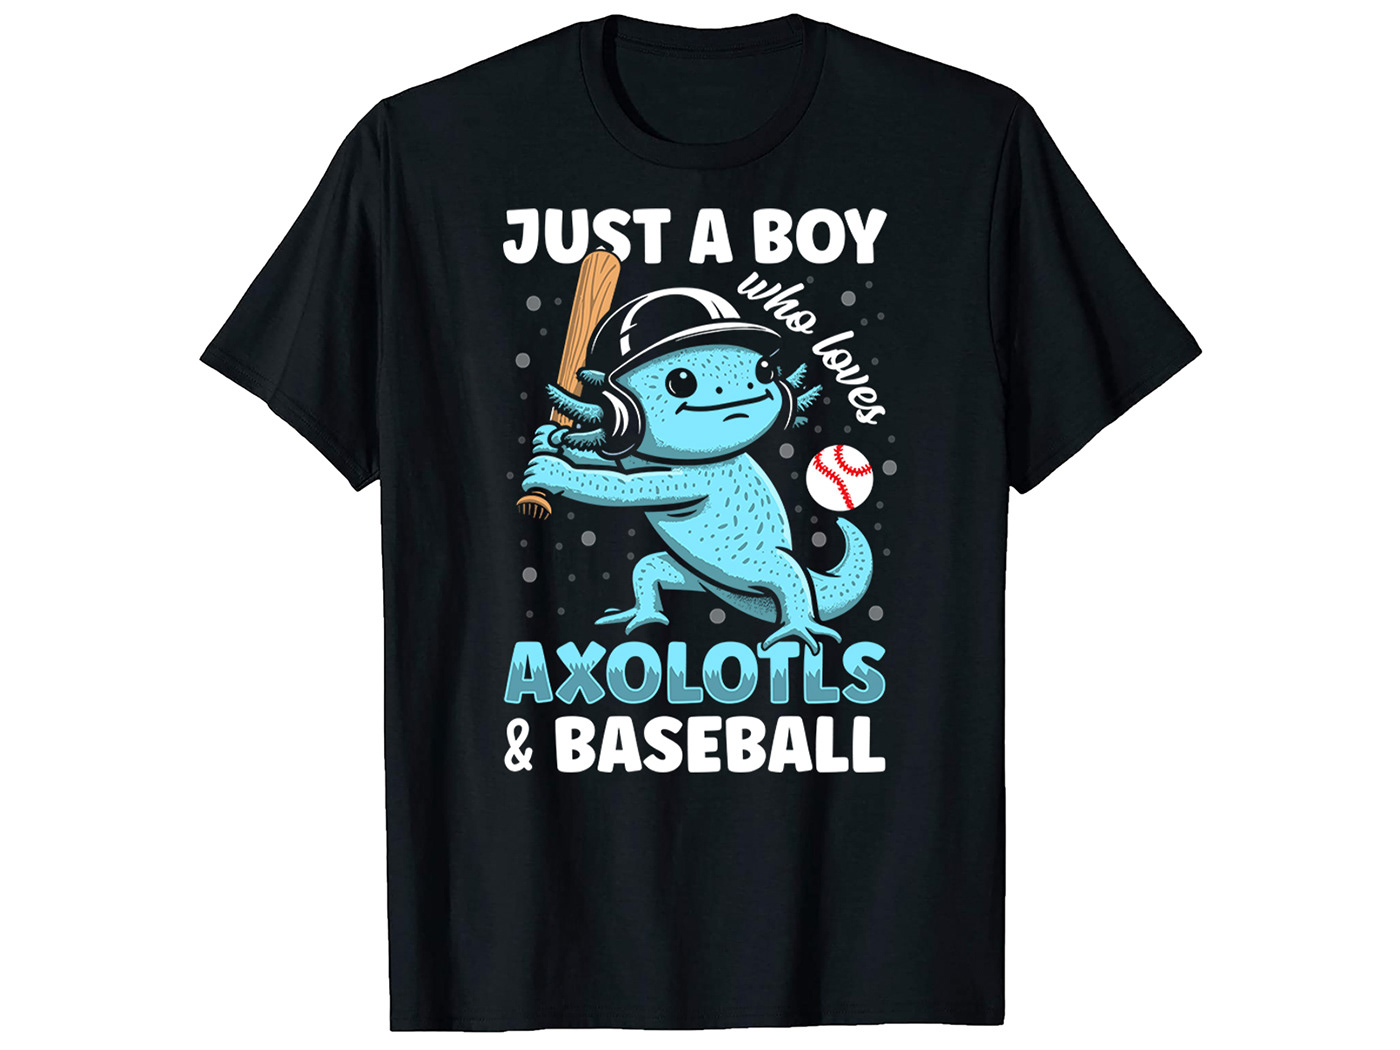 Best Selling T-Shirt Design